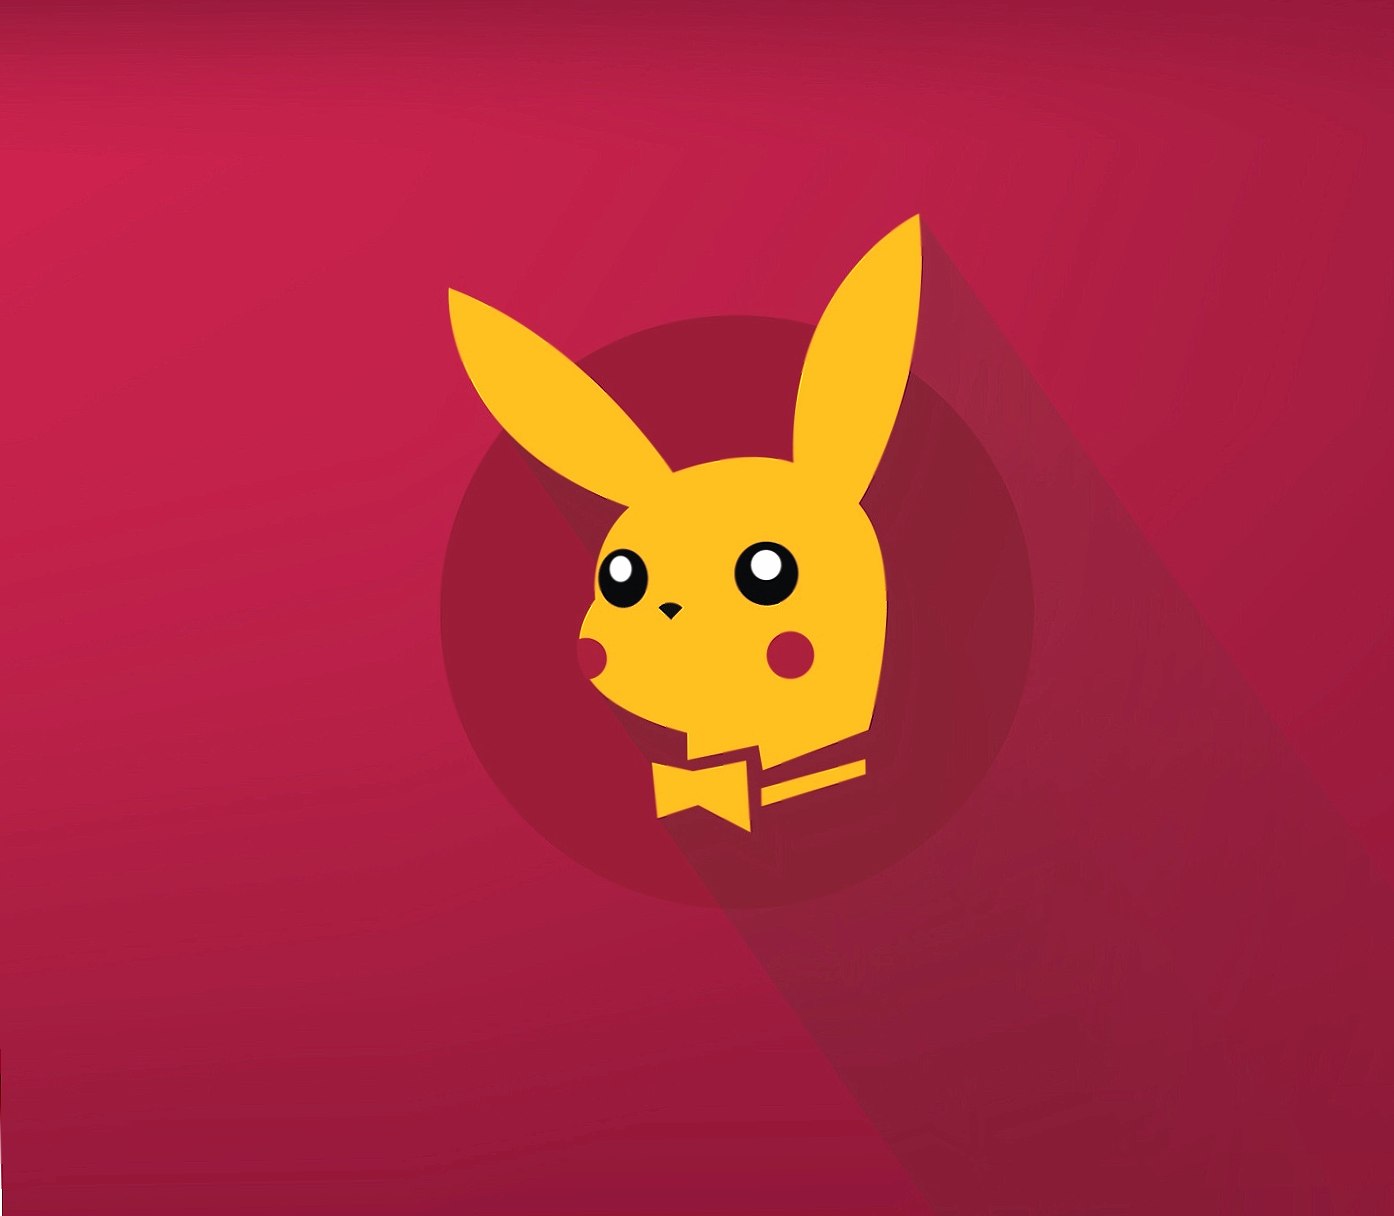 Pikachu at 2048 x 2048 iPad size wallpapers HD quality